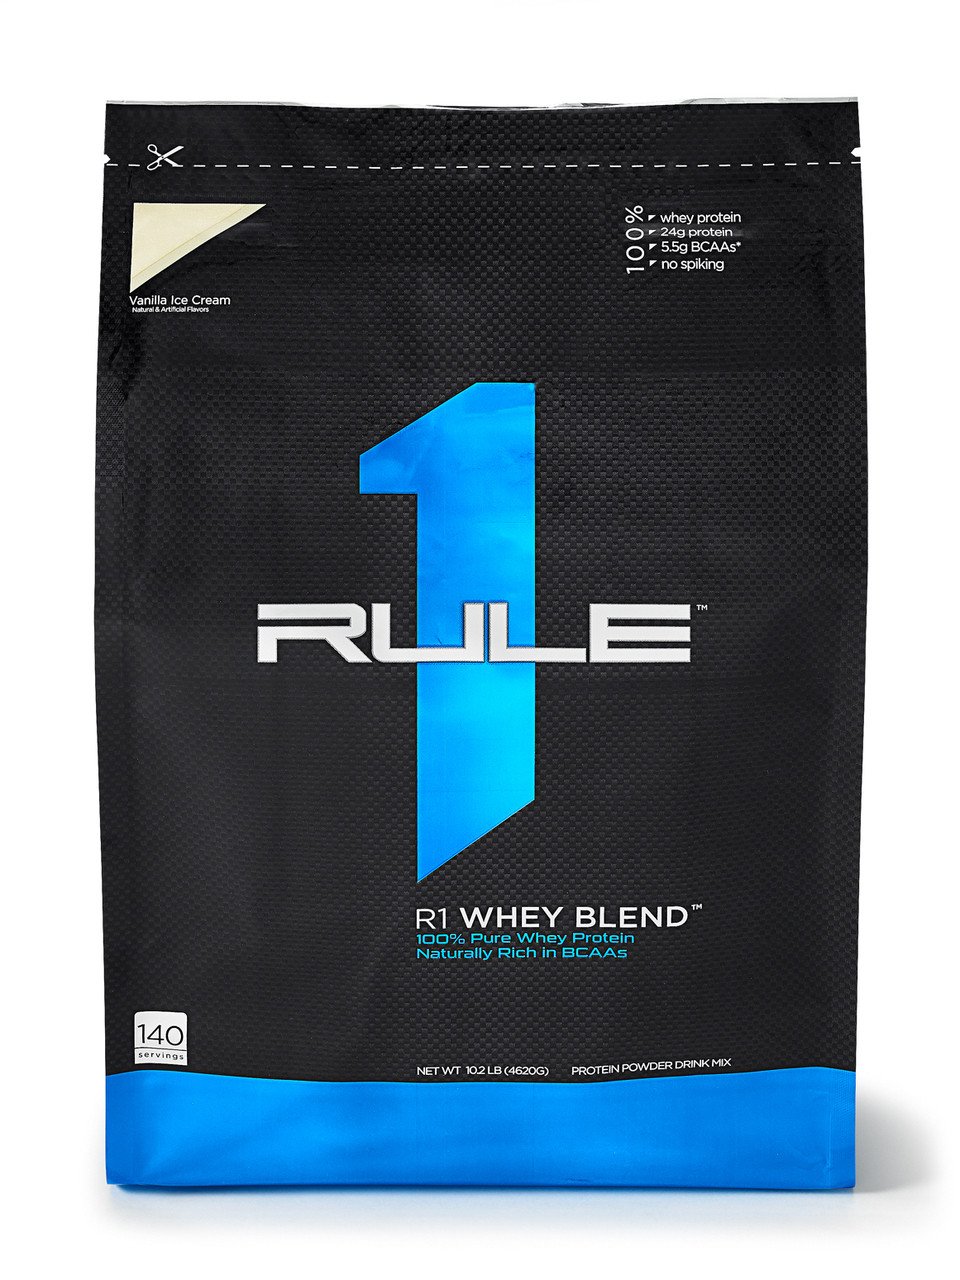 R1 Whey Blend 4,6 кг - Vanilla Ice Cream,  мл, Rule One Proteins. Сывороточный протеин